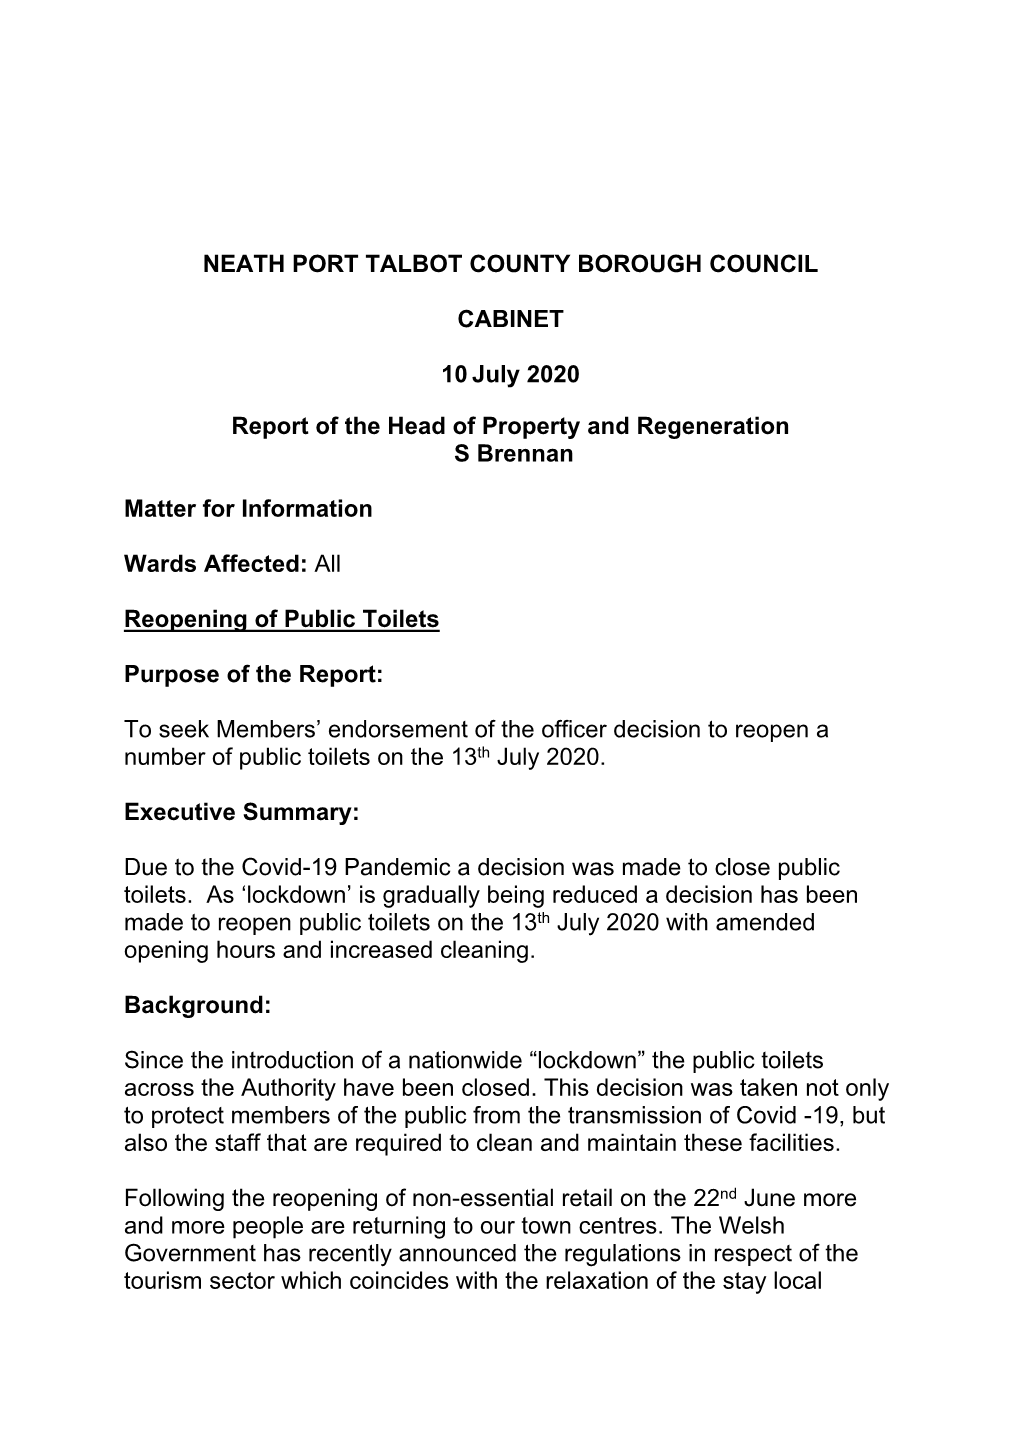 Neath Port Talbot County Borough Council Cabinet